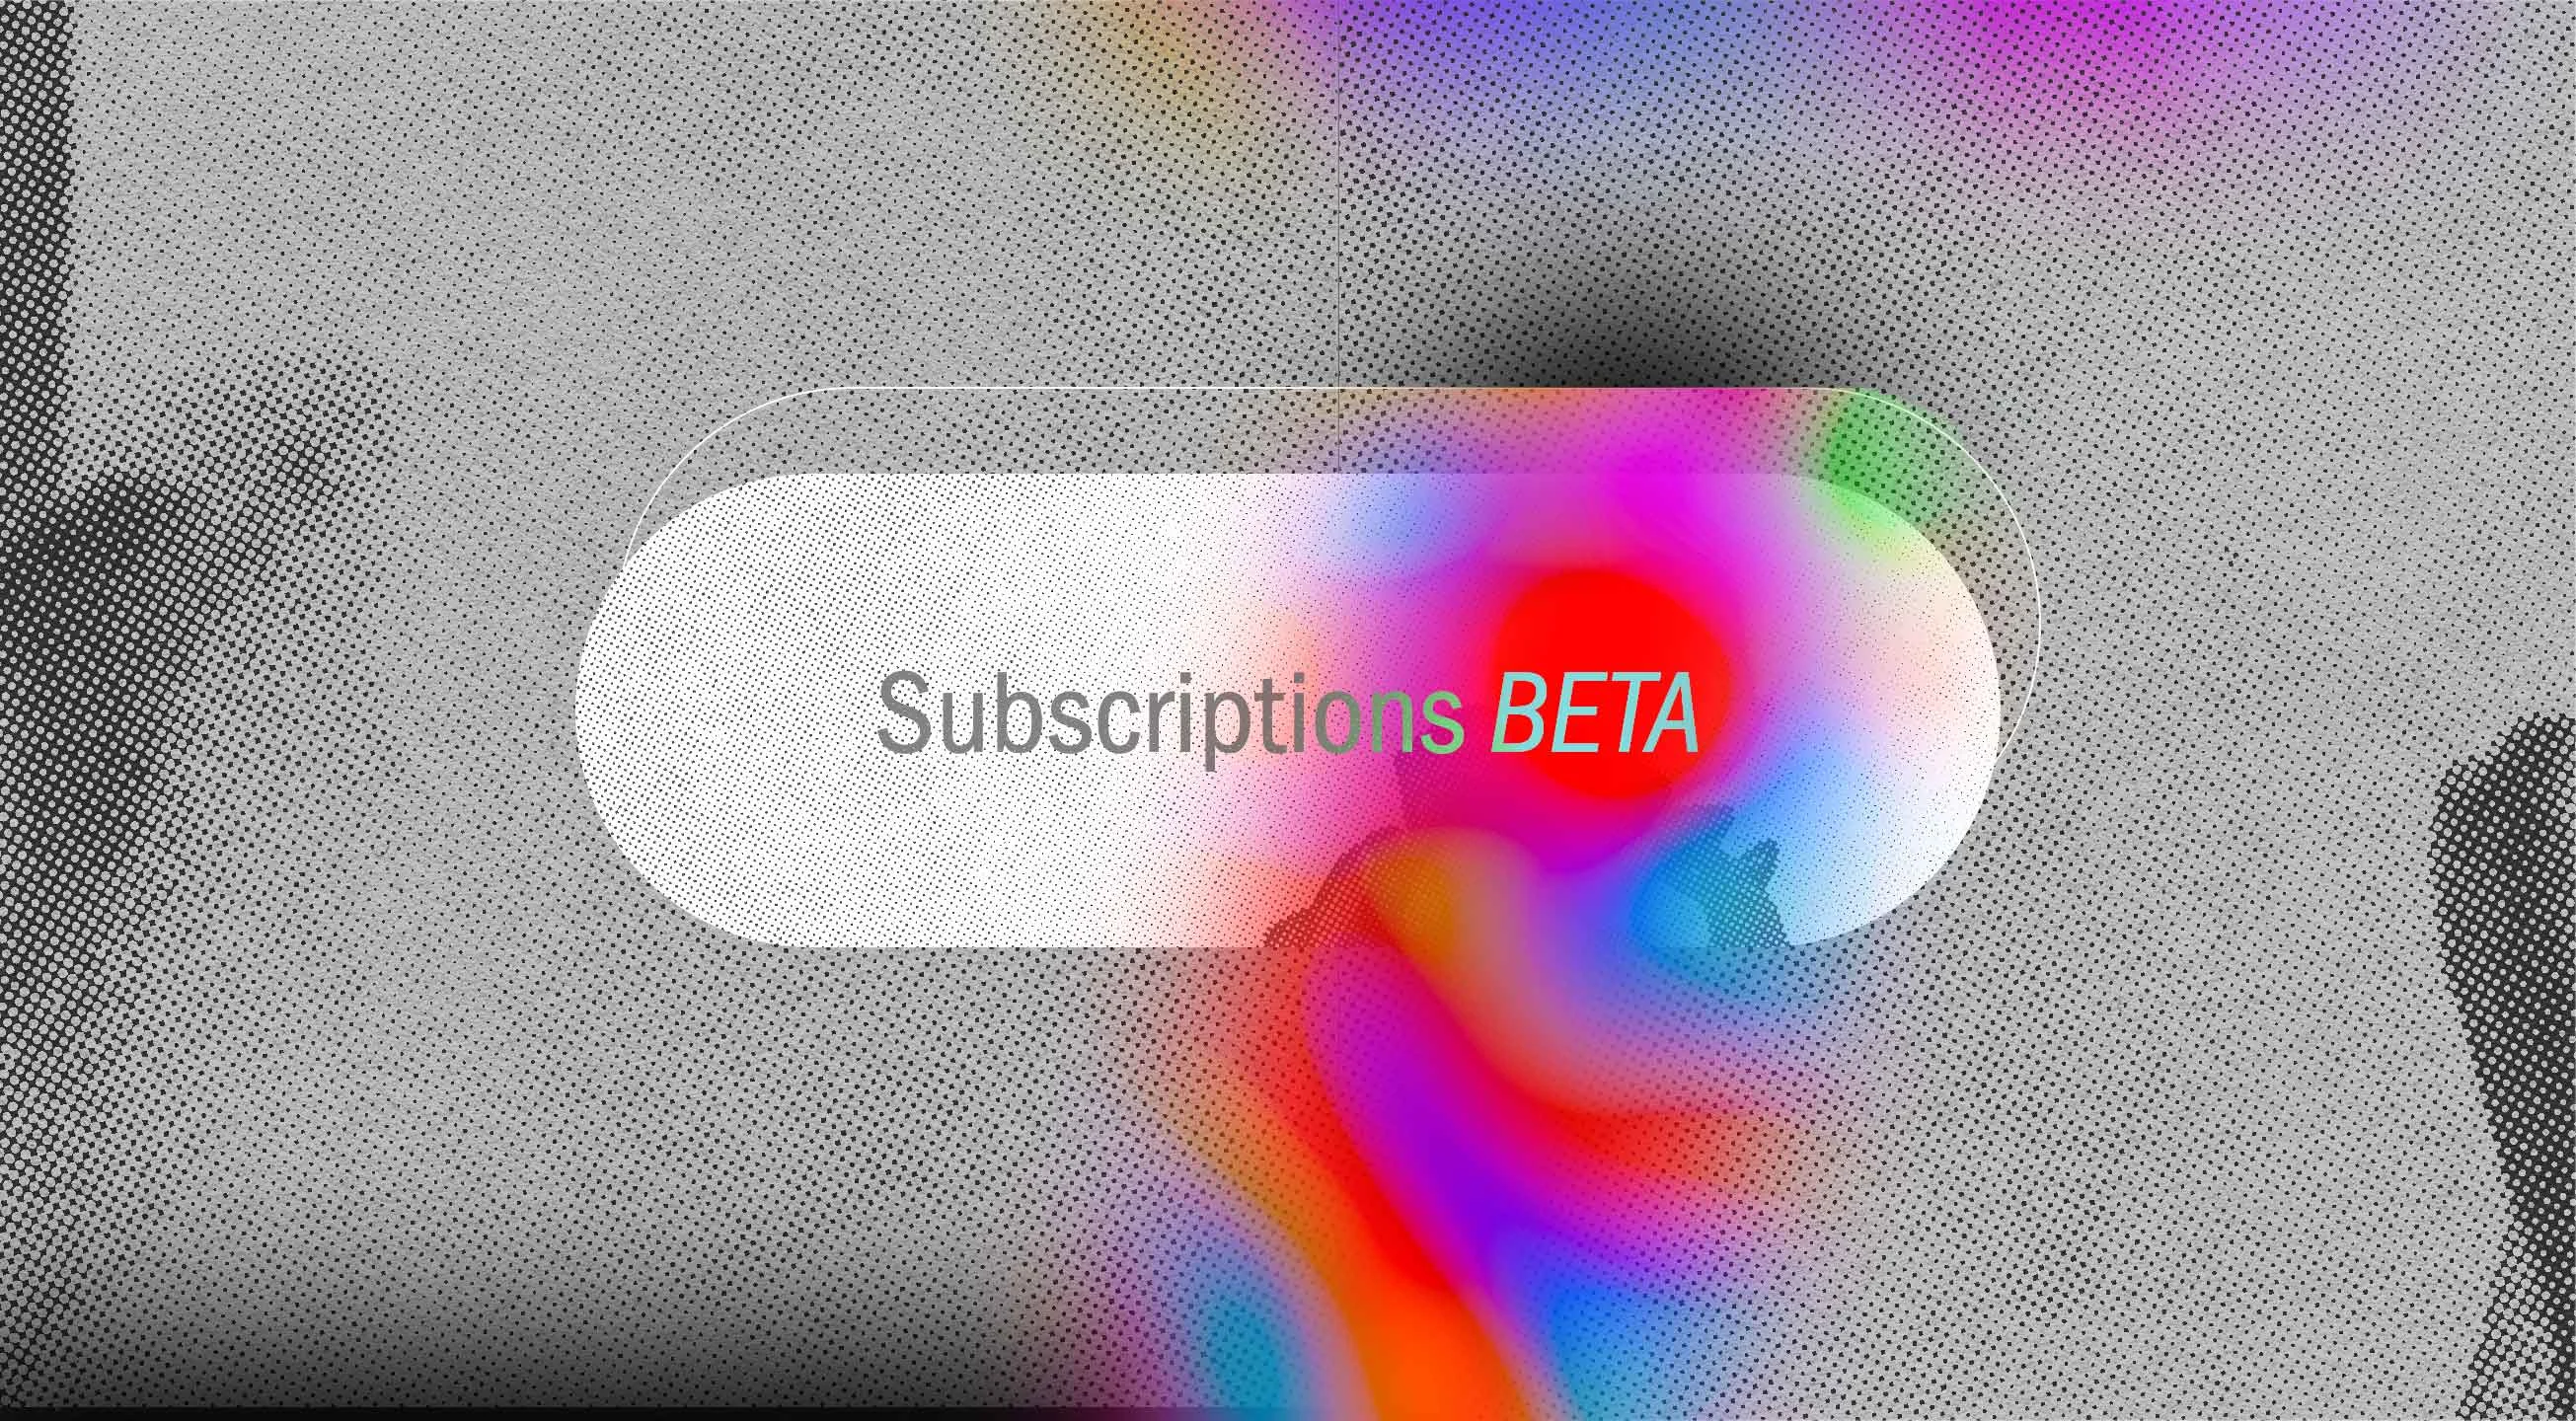 Subscriptions Beta Now Includes Fulfillment Tools